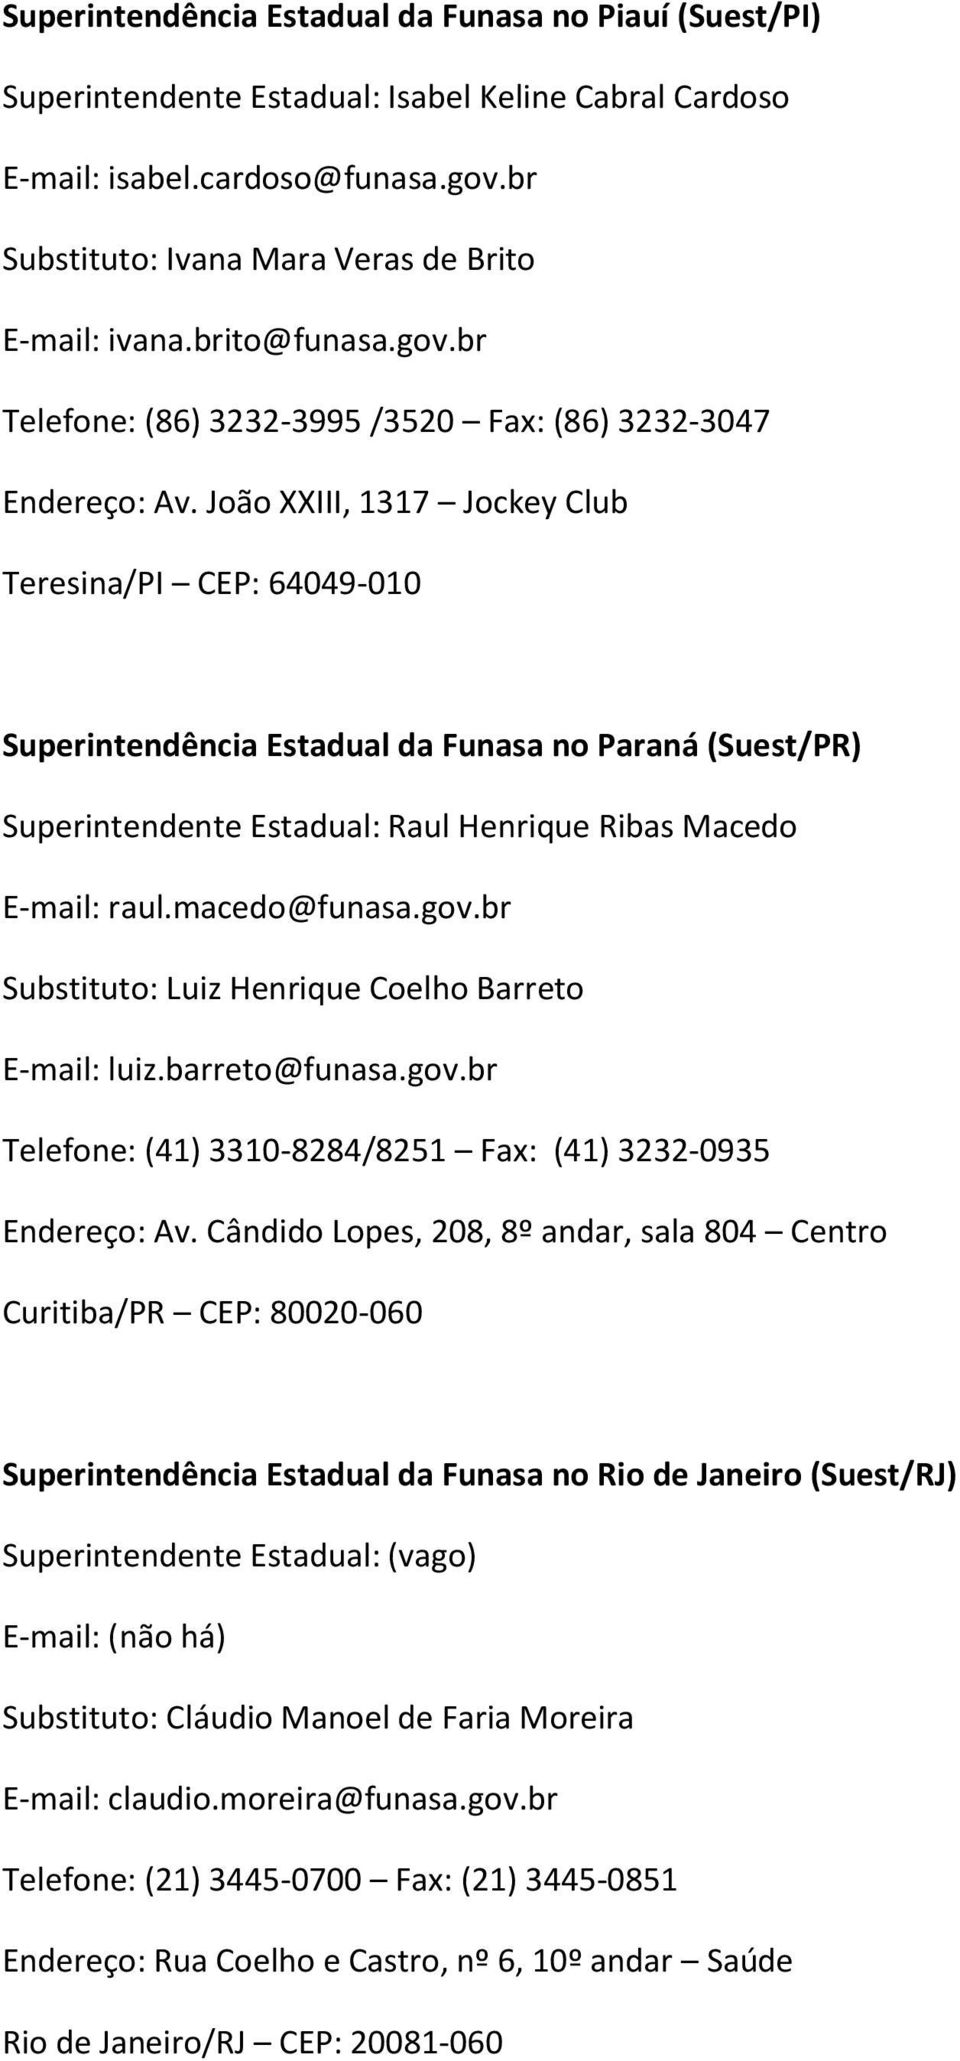 João XXIII, 1317 Jockey Club Teresina/PI CEP: 64049-010 Superintendência Estadual da Funasa no Paraná (Suest/PR) Superintendente Estadual: Raul Henrique Ribas Macedo E-mail: raul.macedo@funasa.gov.